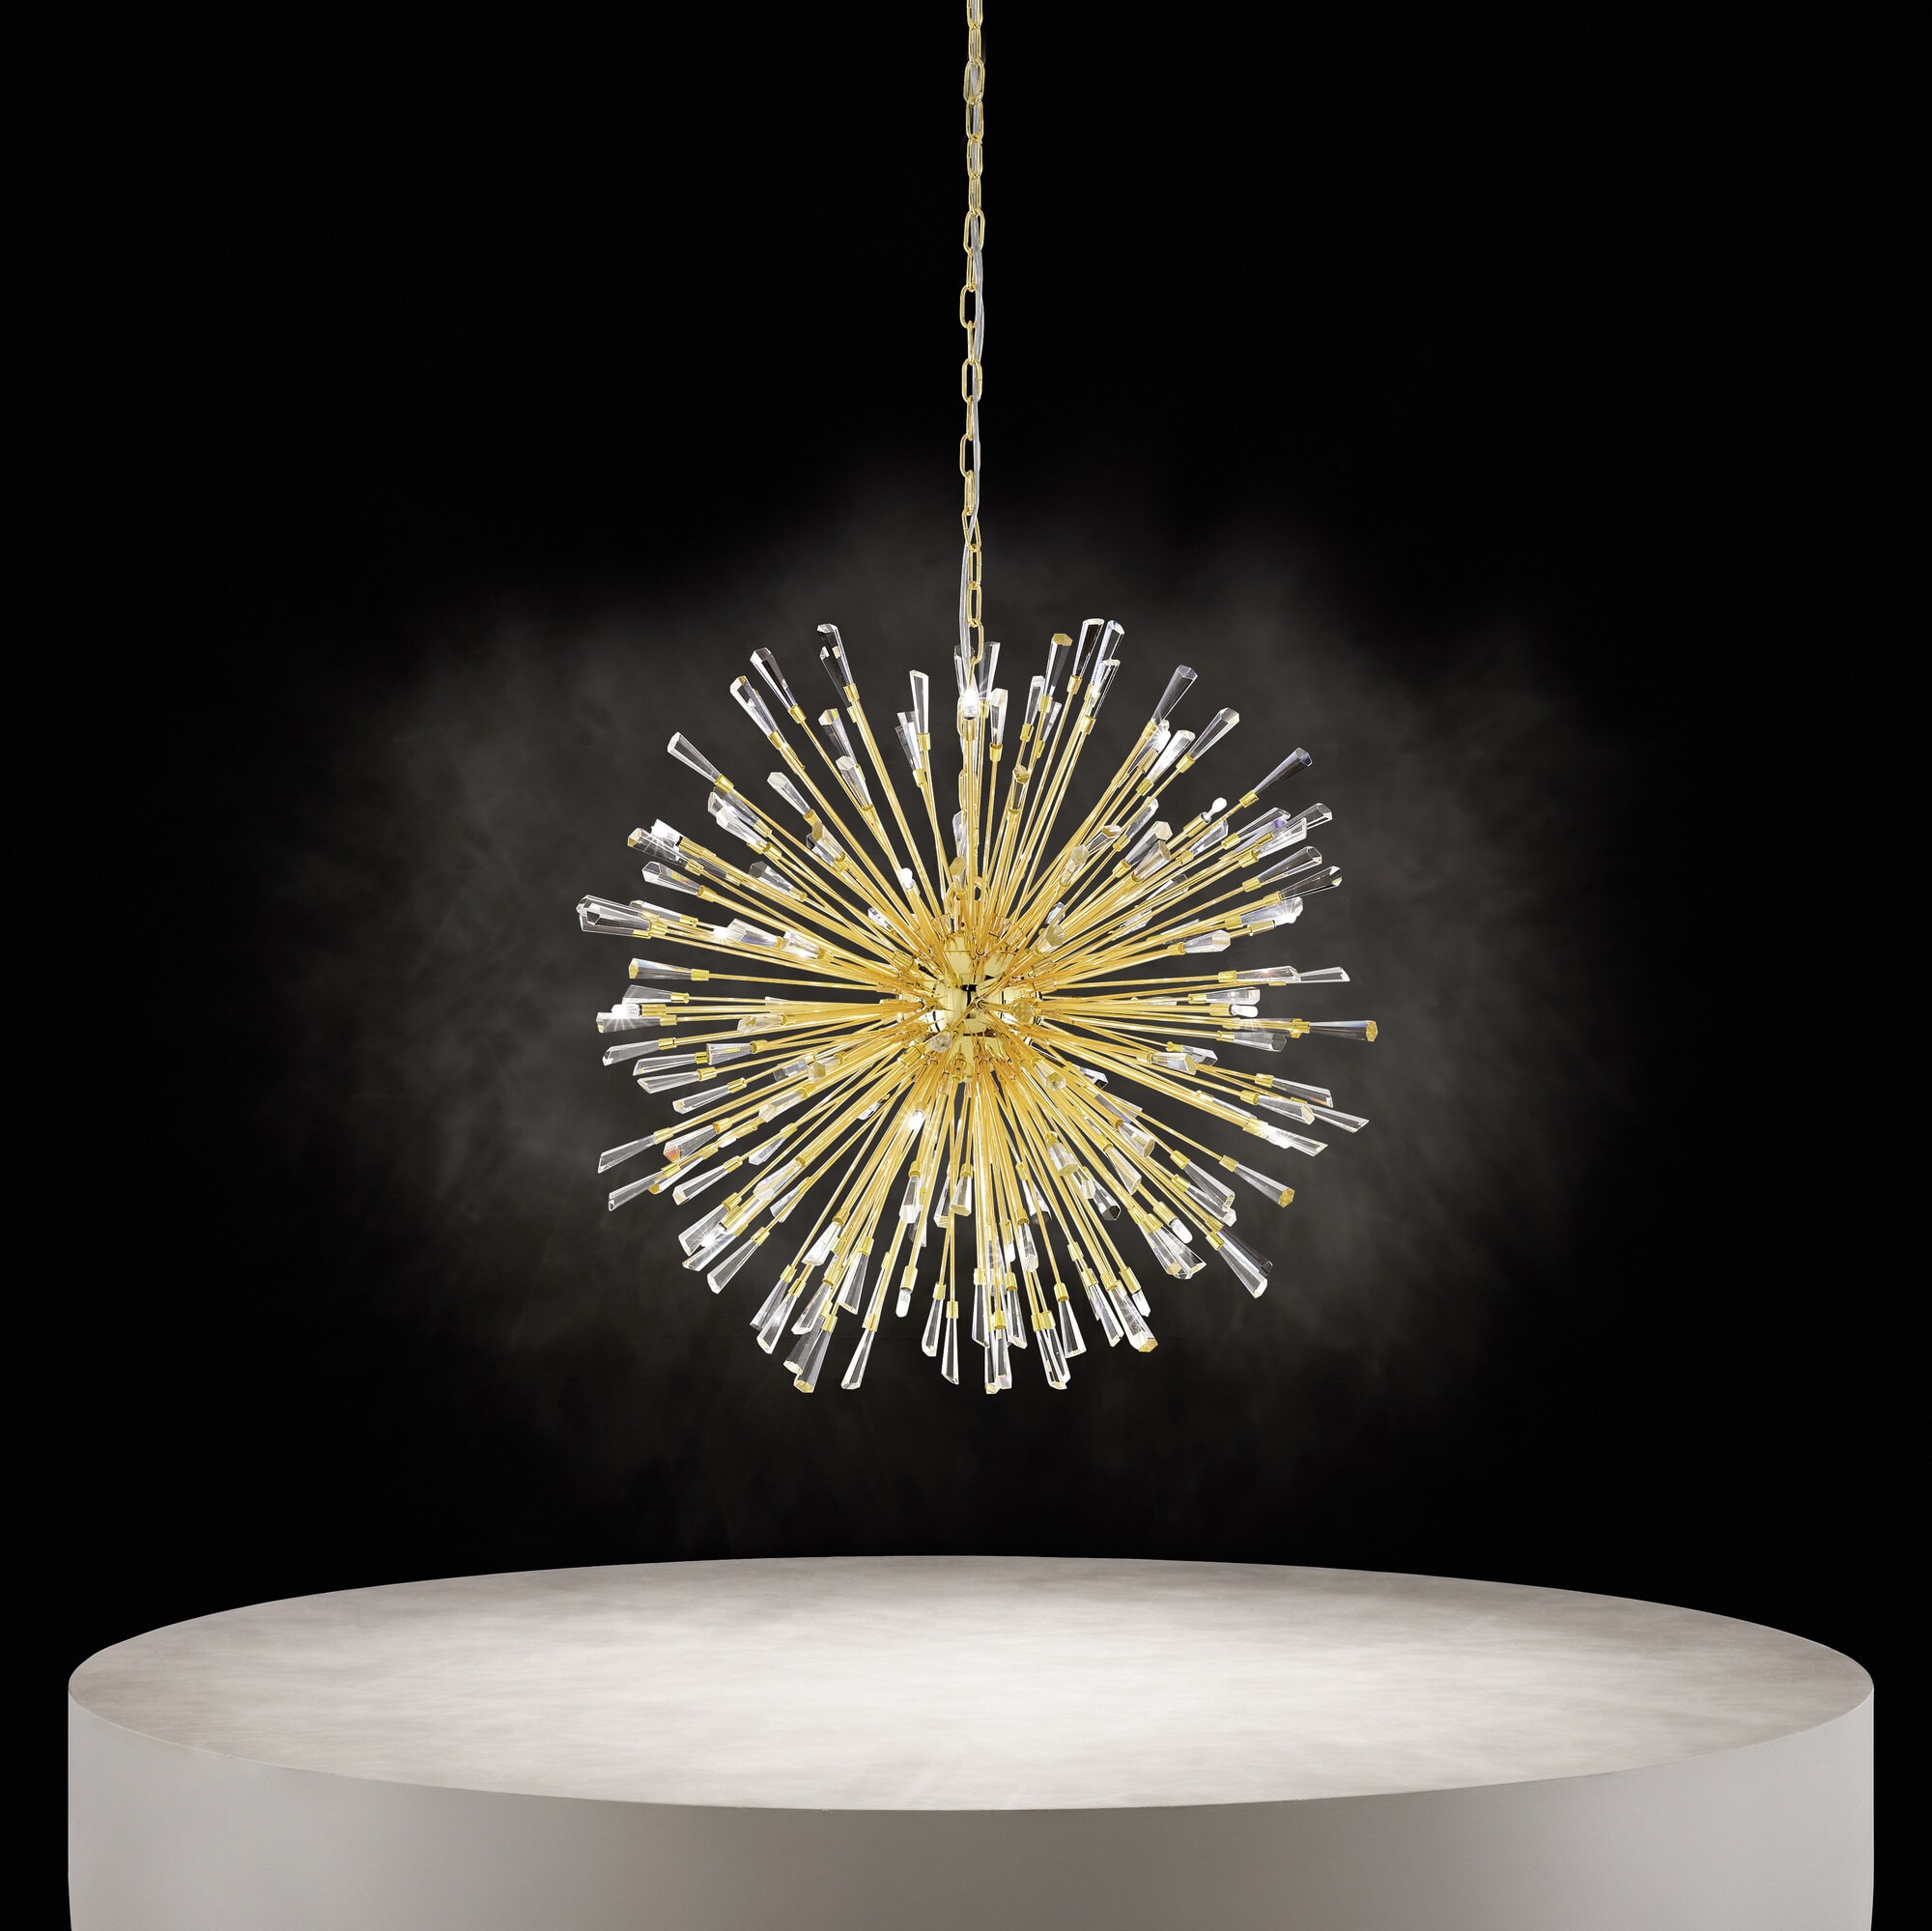 2 165,95 € Free Shipping | Chandelier Eglo Stars of Light Vivaldo 1 25.5W Ø 68 cm. Steel and crystal. Golden Color